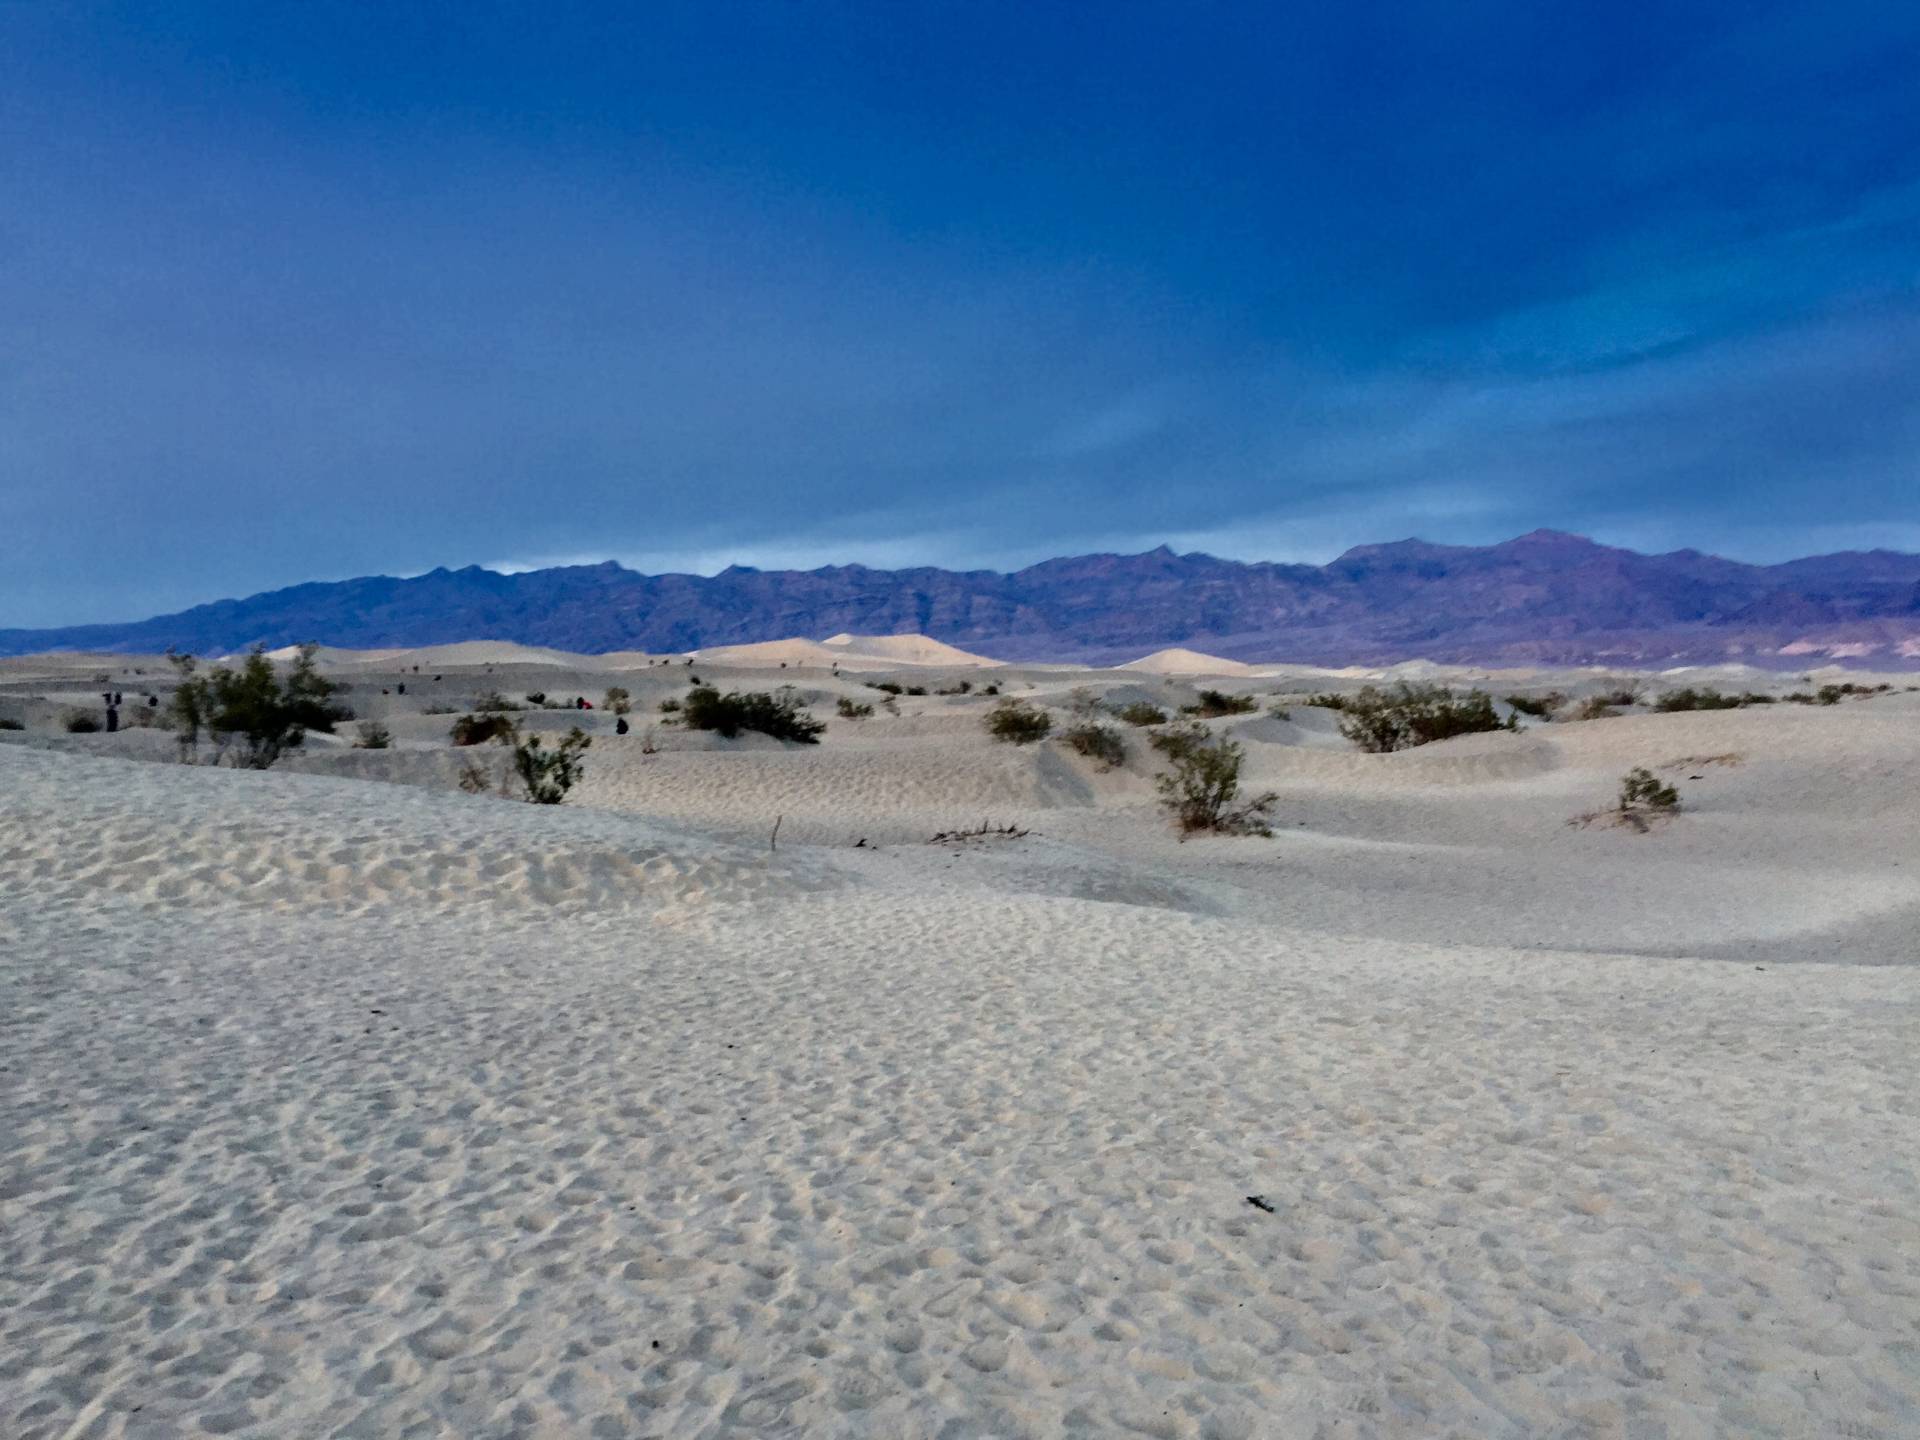 Views across the Mesquite Sand Dunes, Death Valley National Park, California